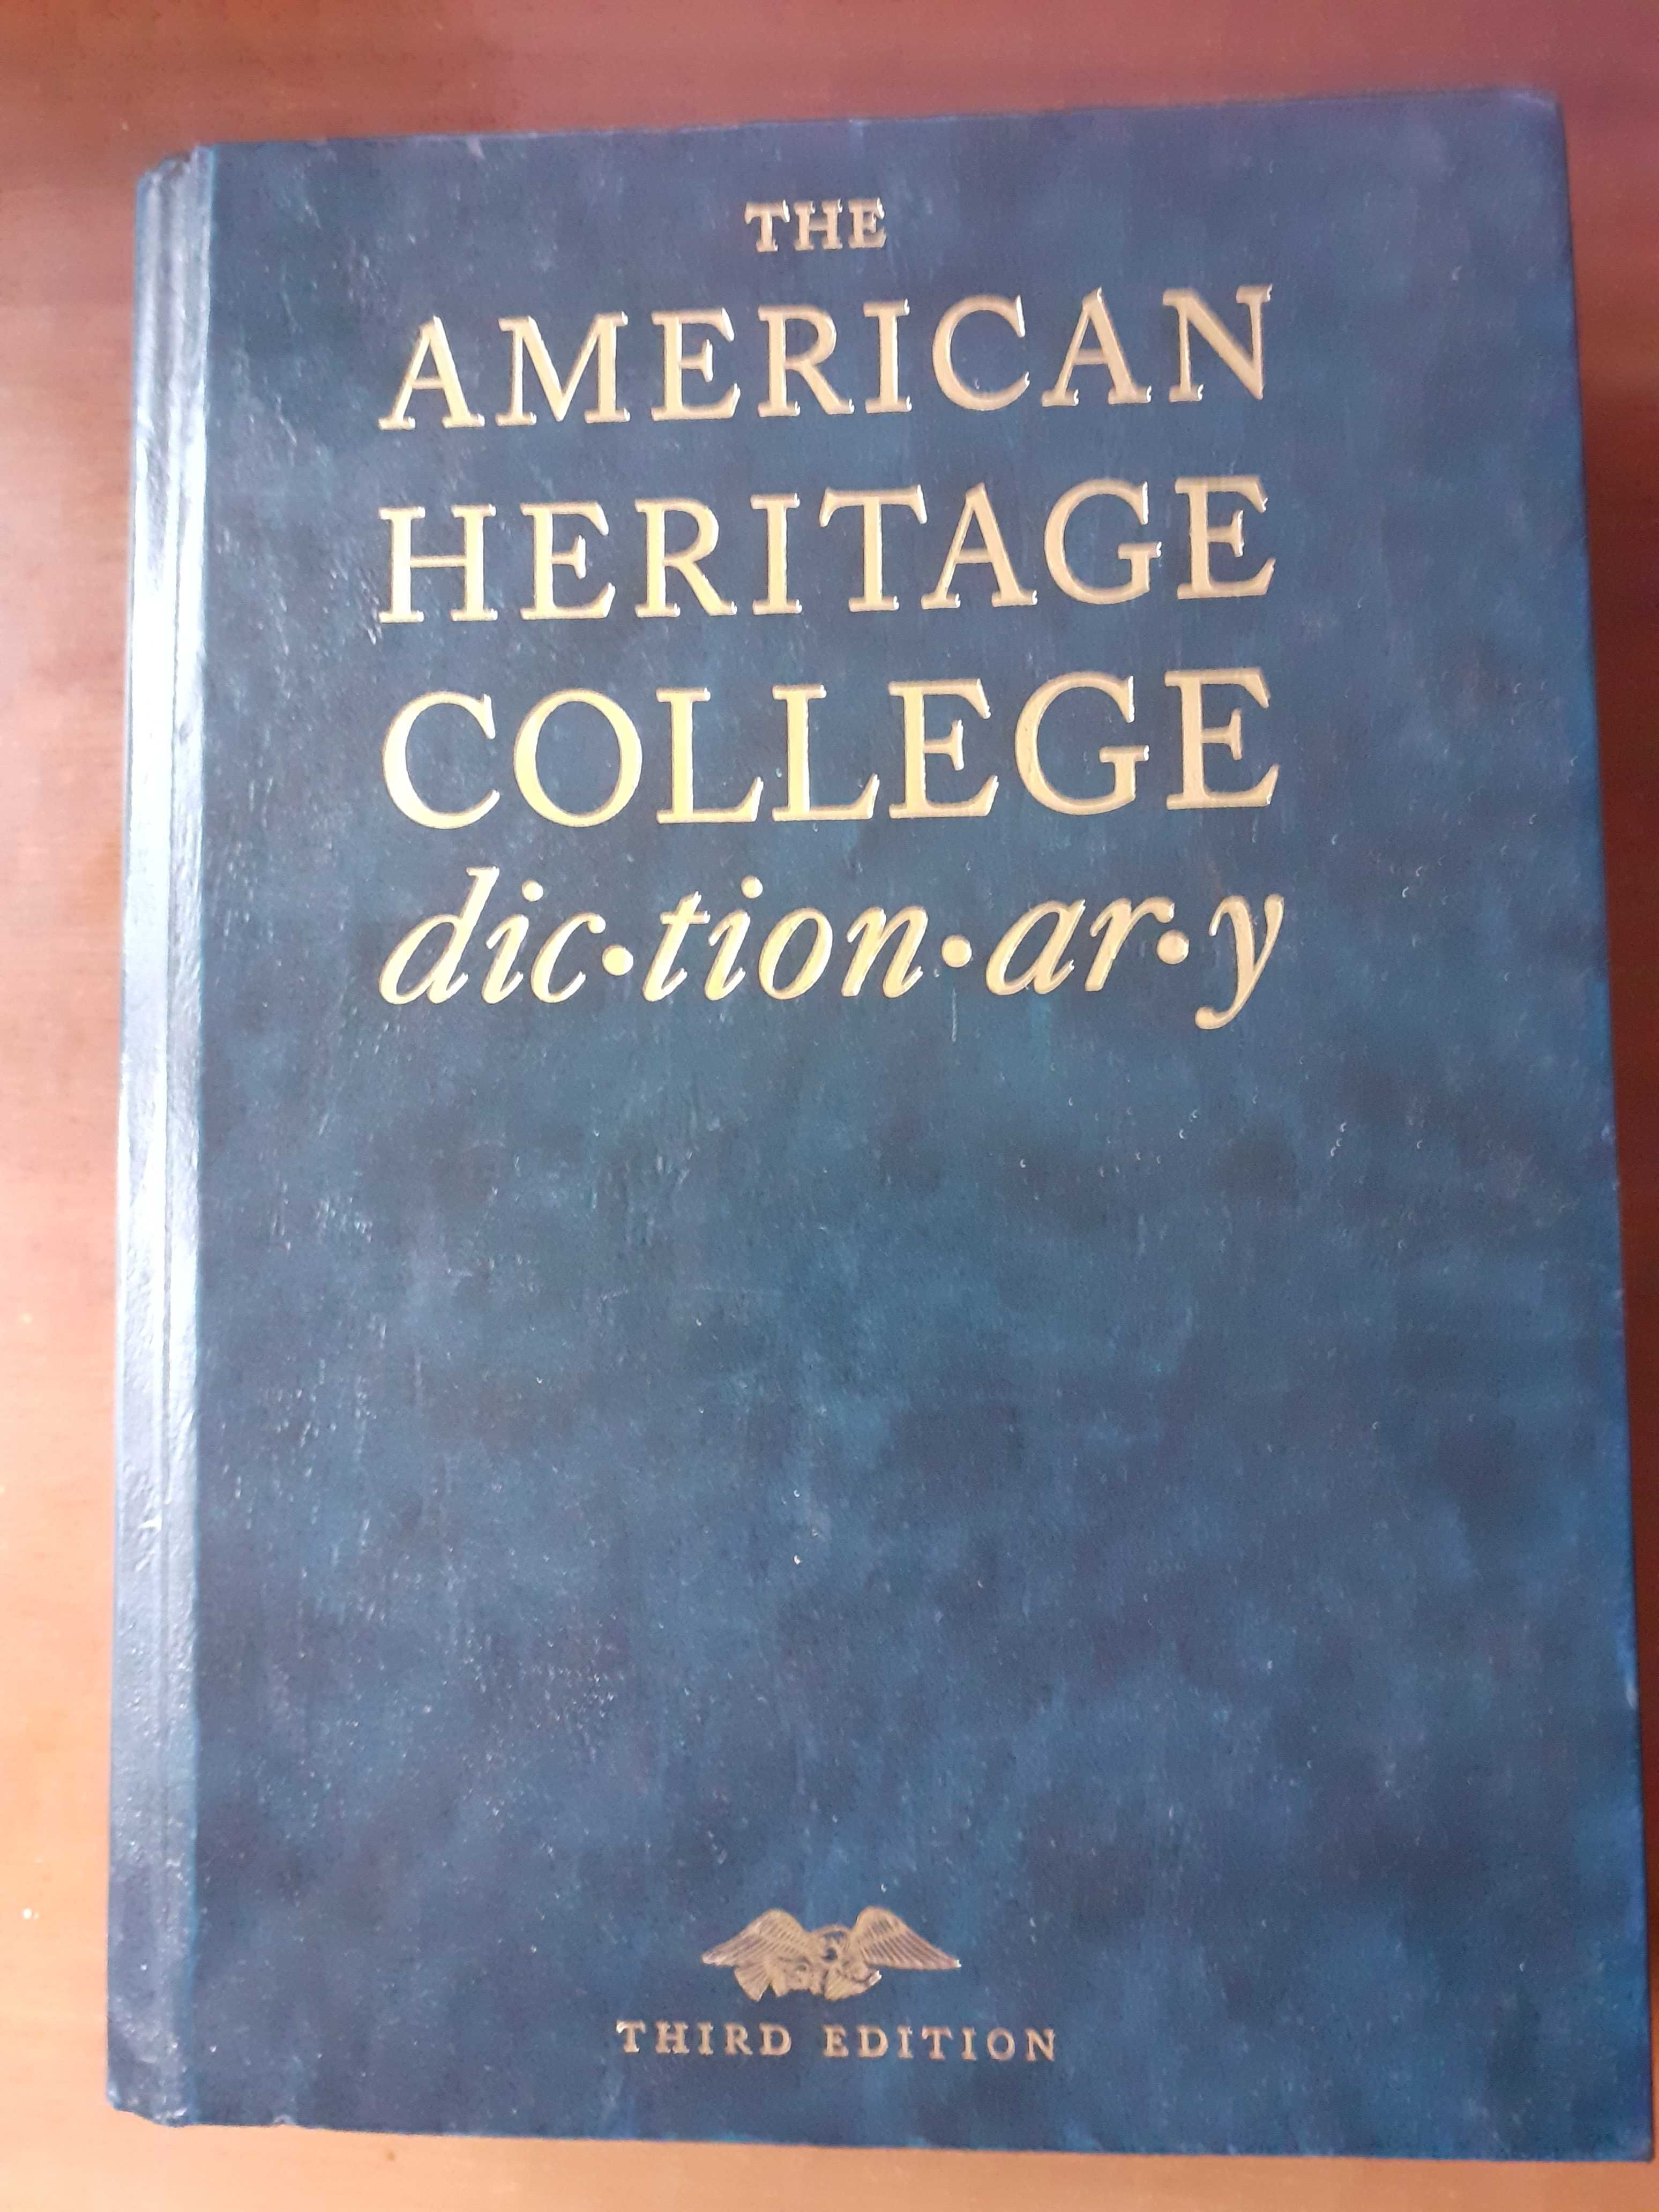 Продам словарь The American Heritage College Dictionary. Third Edition